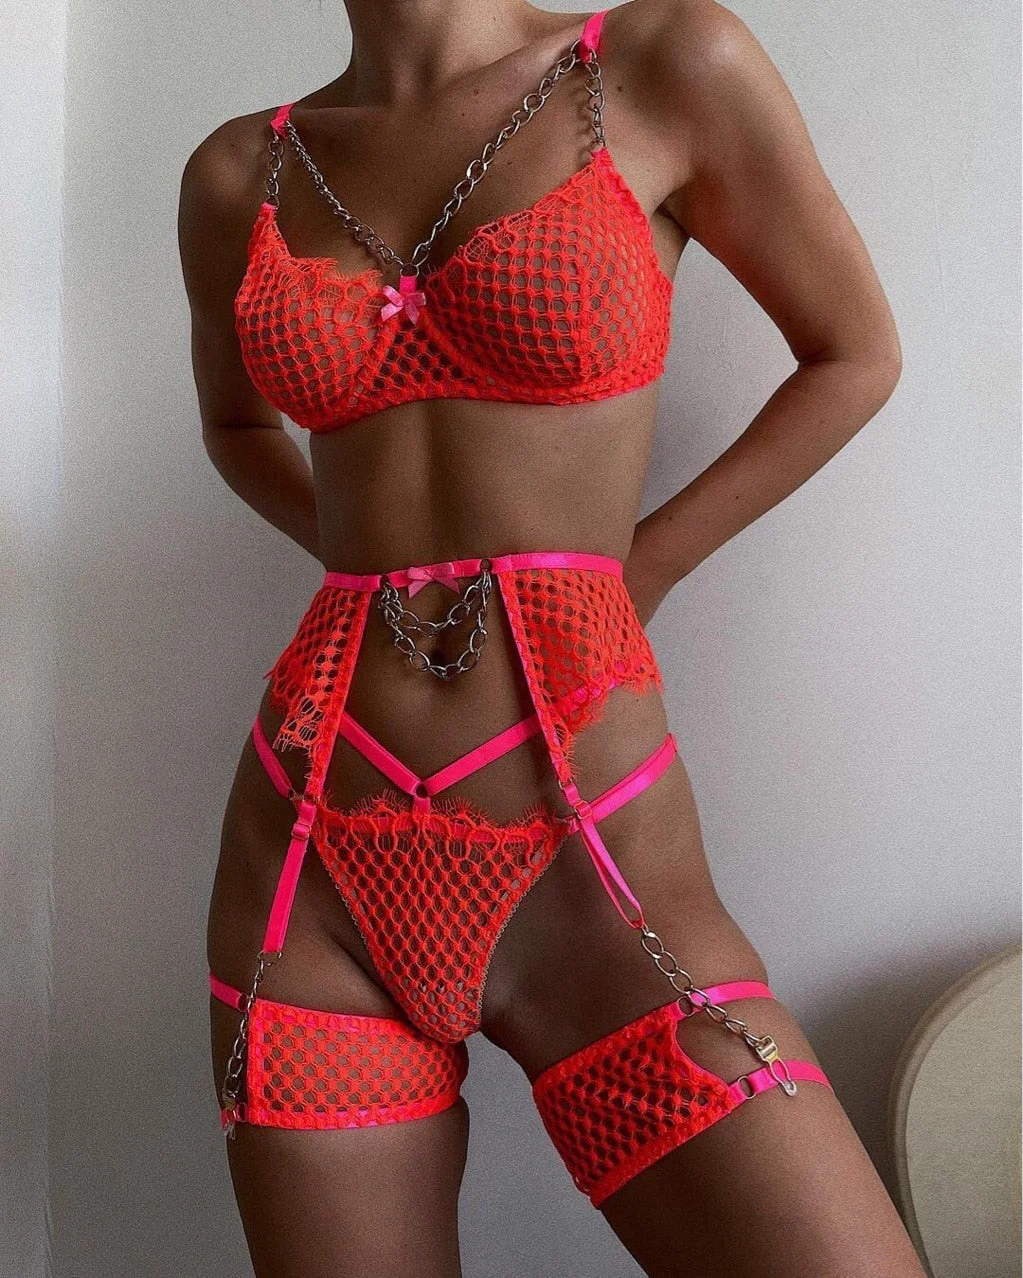 MIRABELLE Lingerie Sexy Lace Bra Chain Linked 4-Piece Transparent Underwear Set Sex Suit Erotic Costume Porn Hot Luxury Outfits